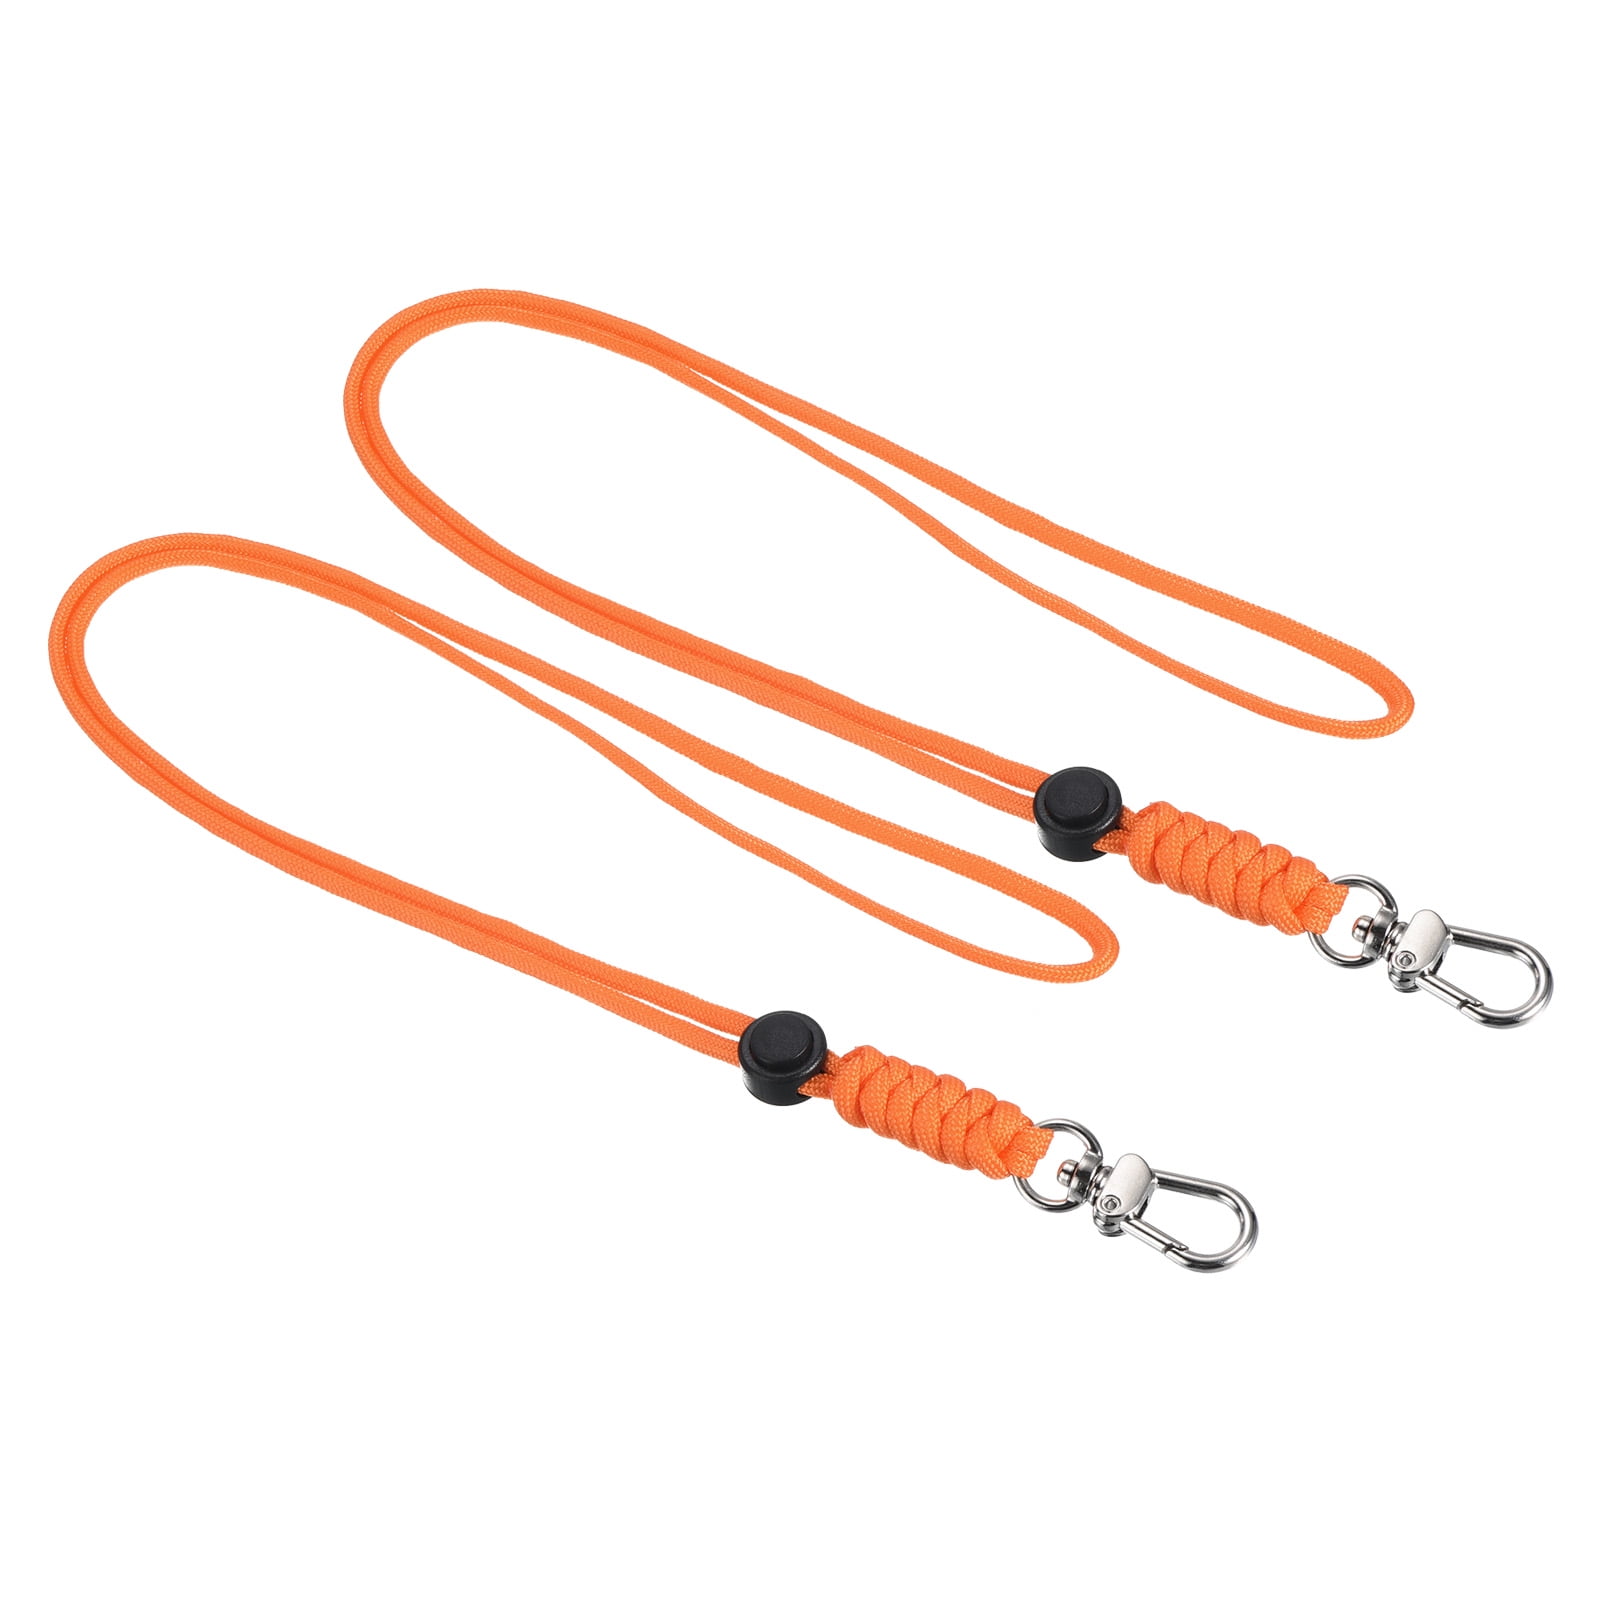 Lanyard String, Plastic Lanyard String for Bracelet Making, 24pcs Gimp  String Plastic Lacing Cord Kit Colorful Bracelet Cord for DIY Jewelry  Bracelet Necklaces Key Chains Making